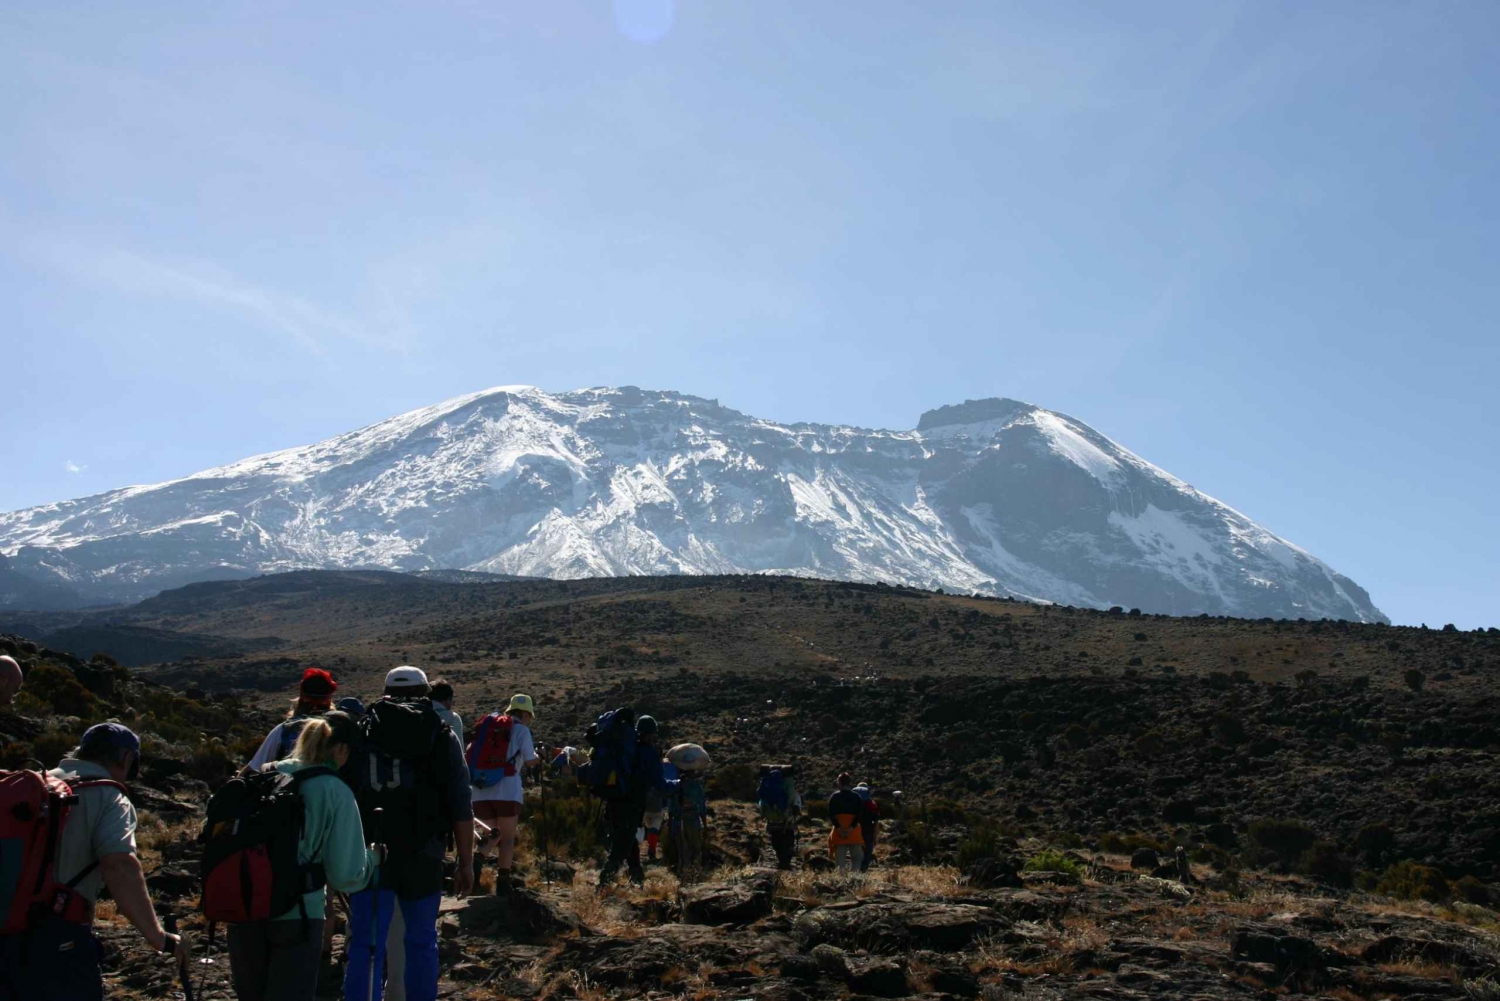 Moshi: Guided Kilimanjaro Day Tour